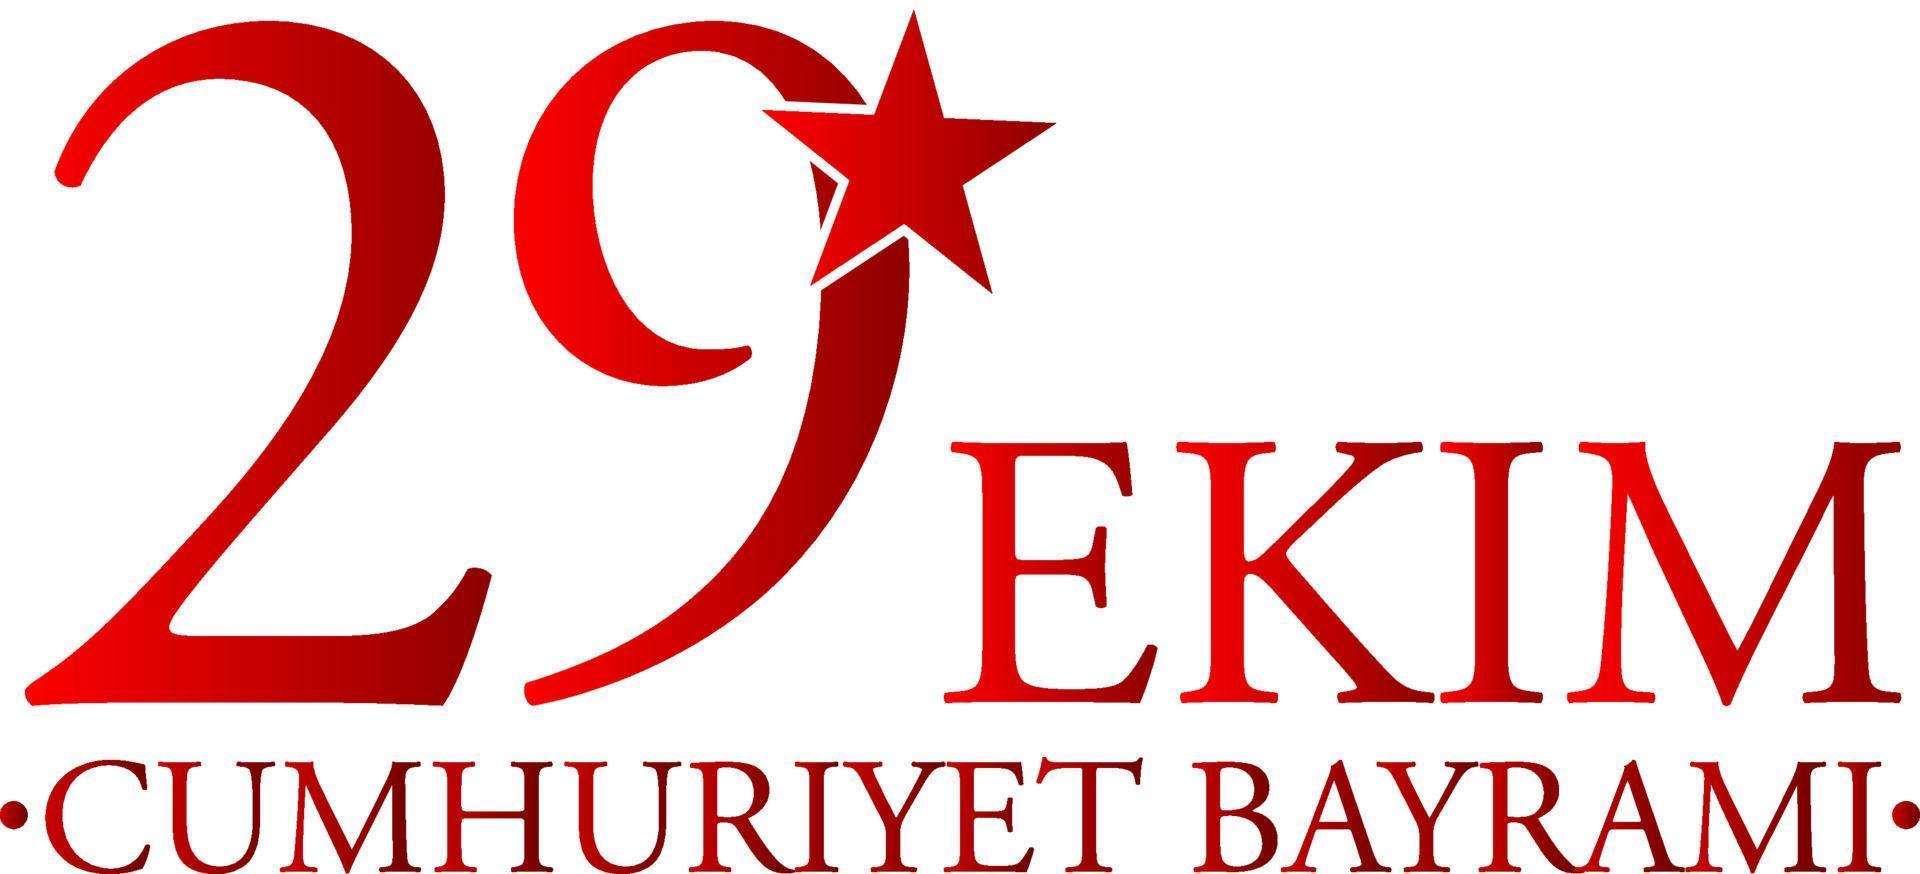 Republic Day of Turkey text design vector